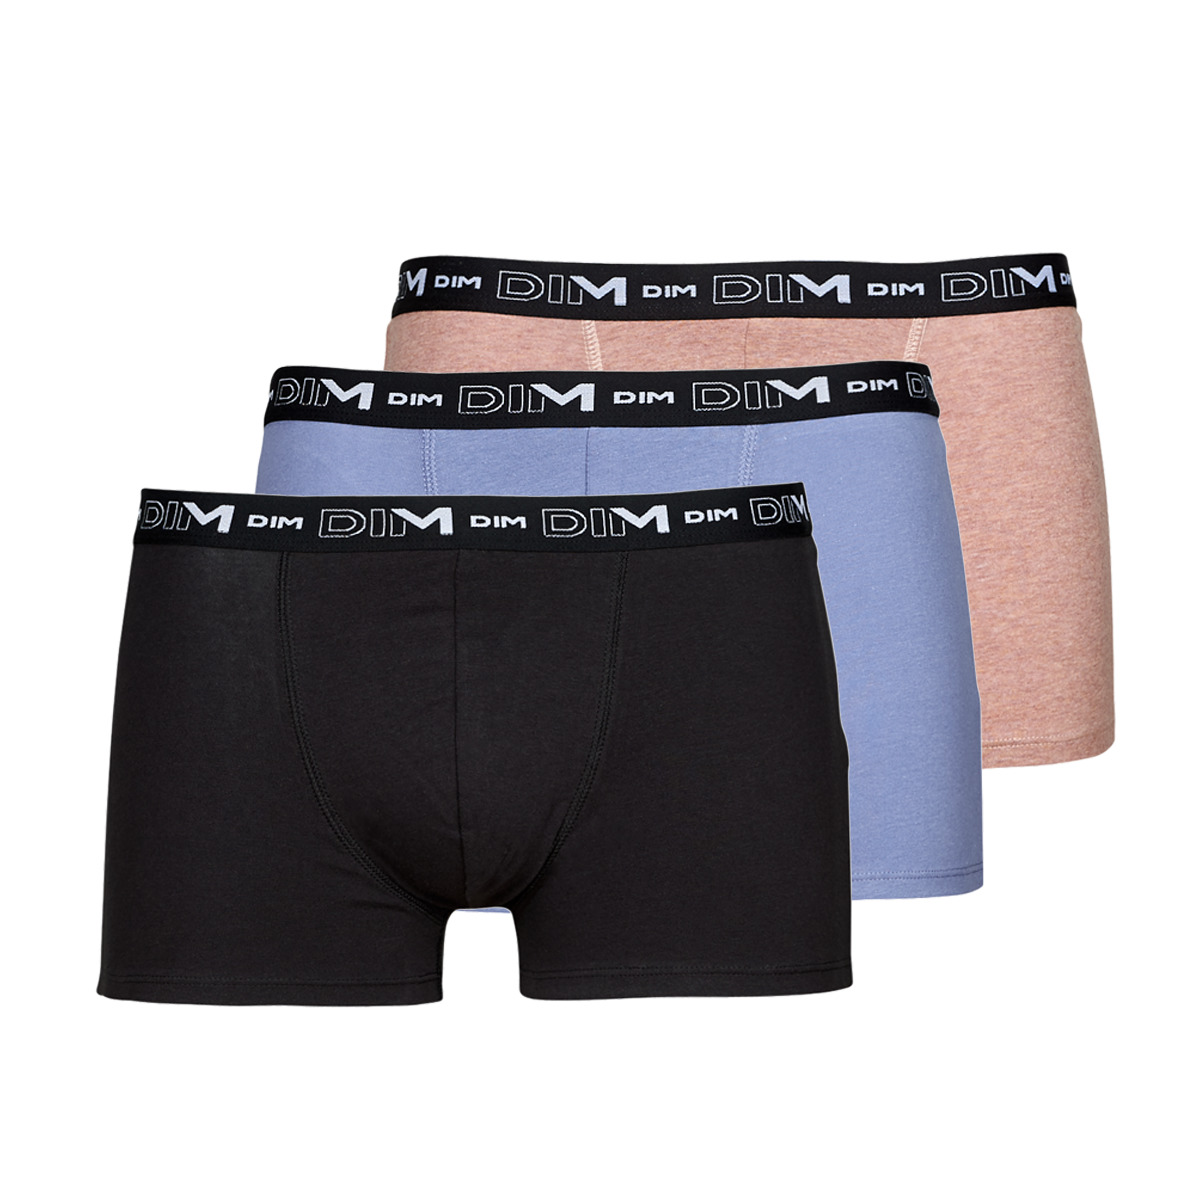 Underwear Men Boxer shorts DIM BOXER X3 Black / Blue / Beige